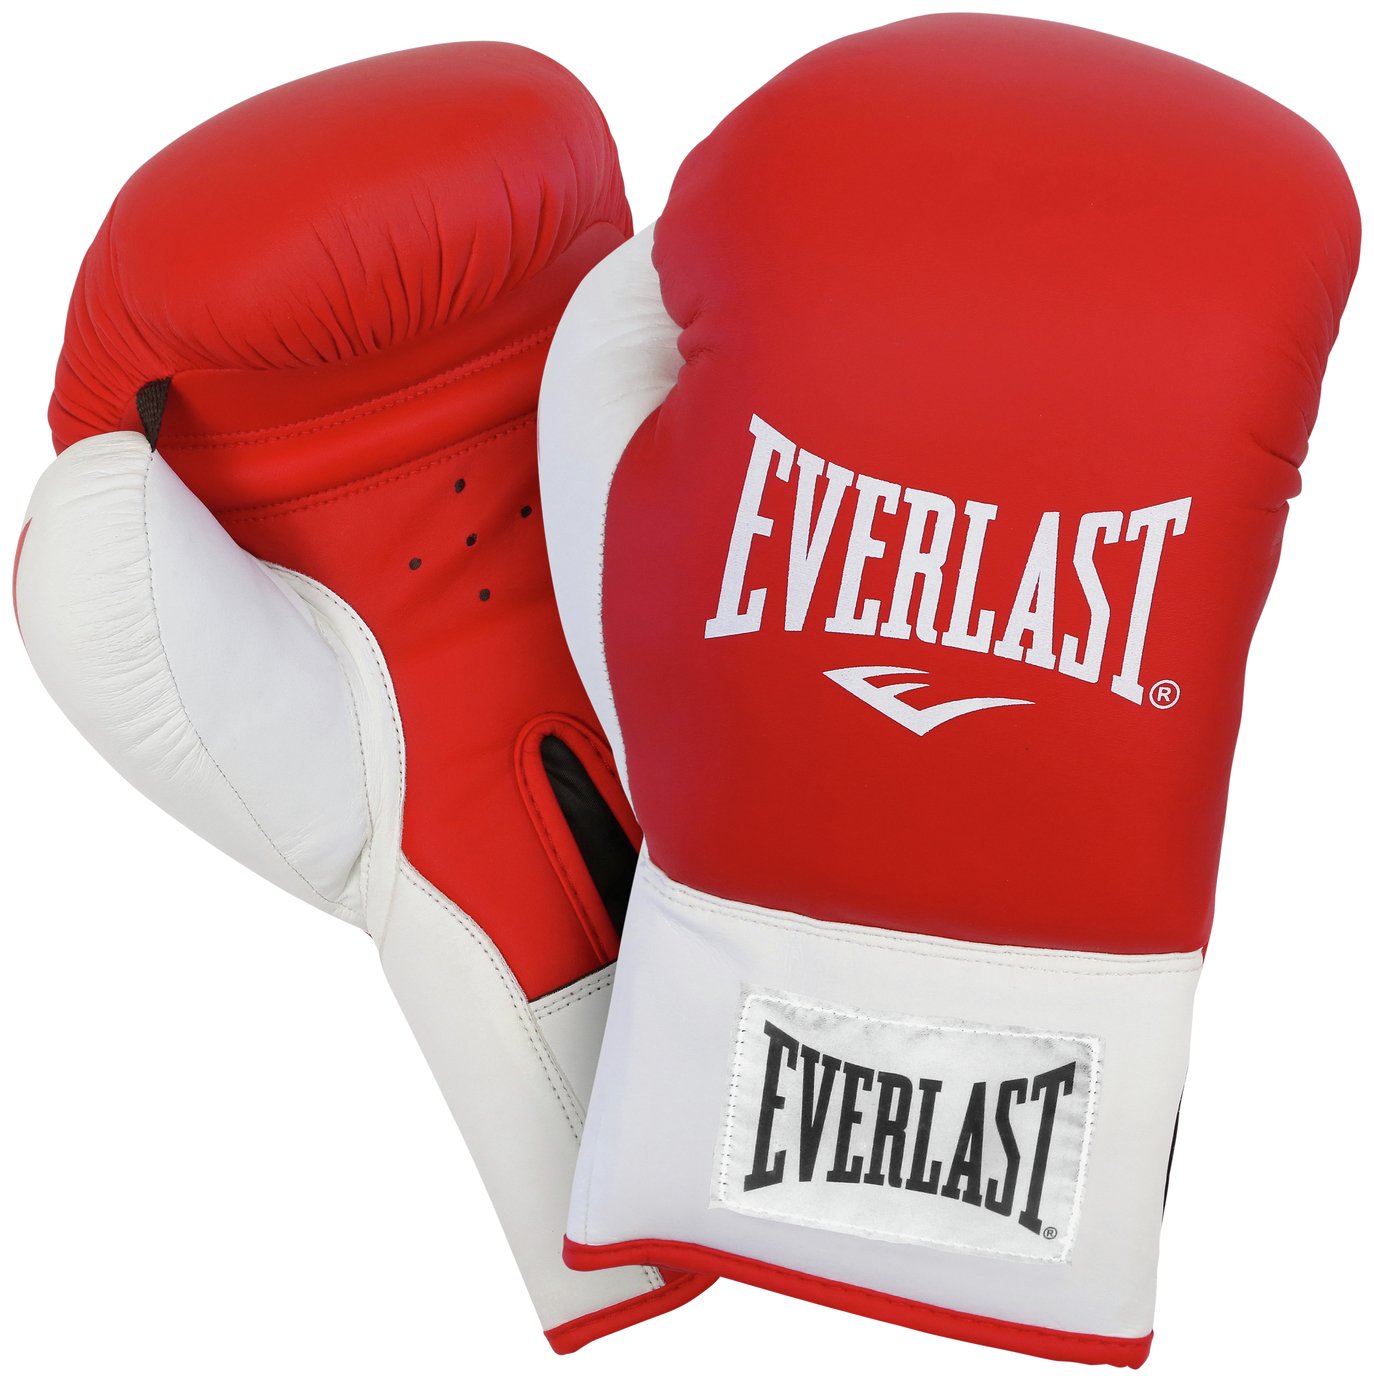 Everlast 8oz Junior Boxing Gloves review